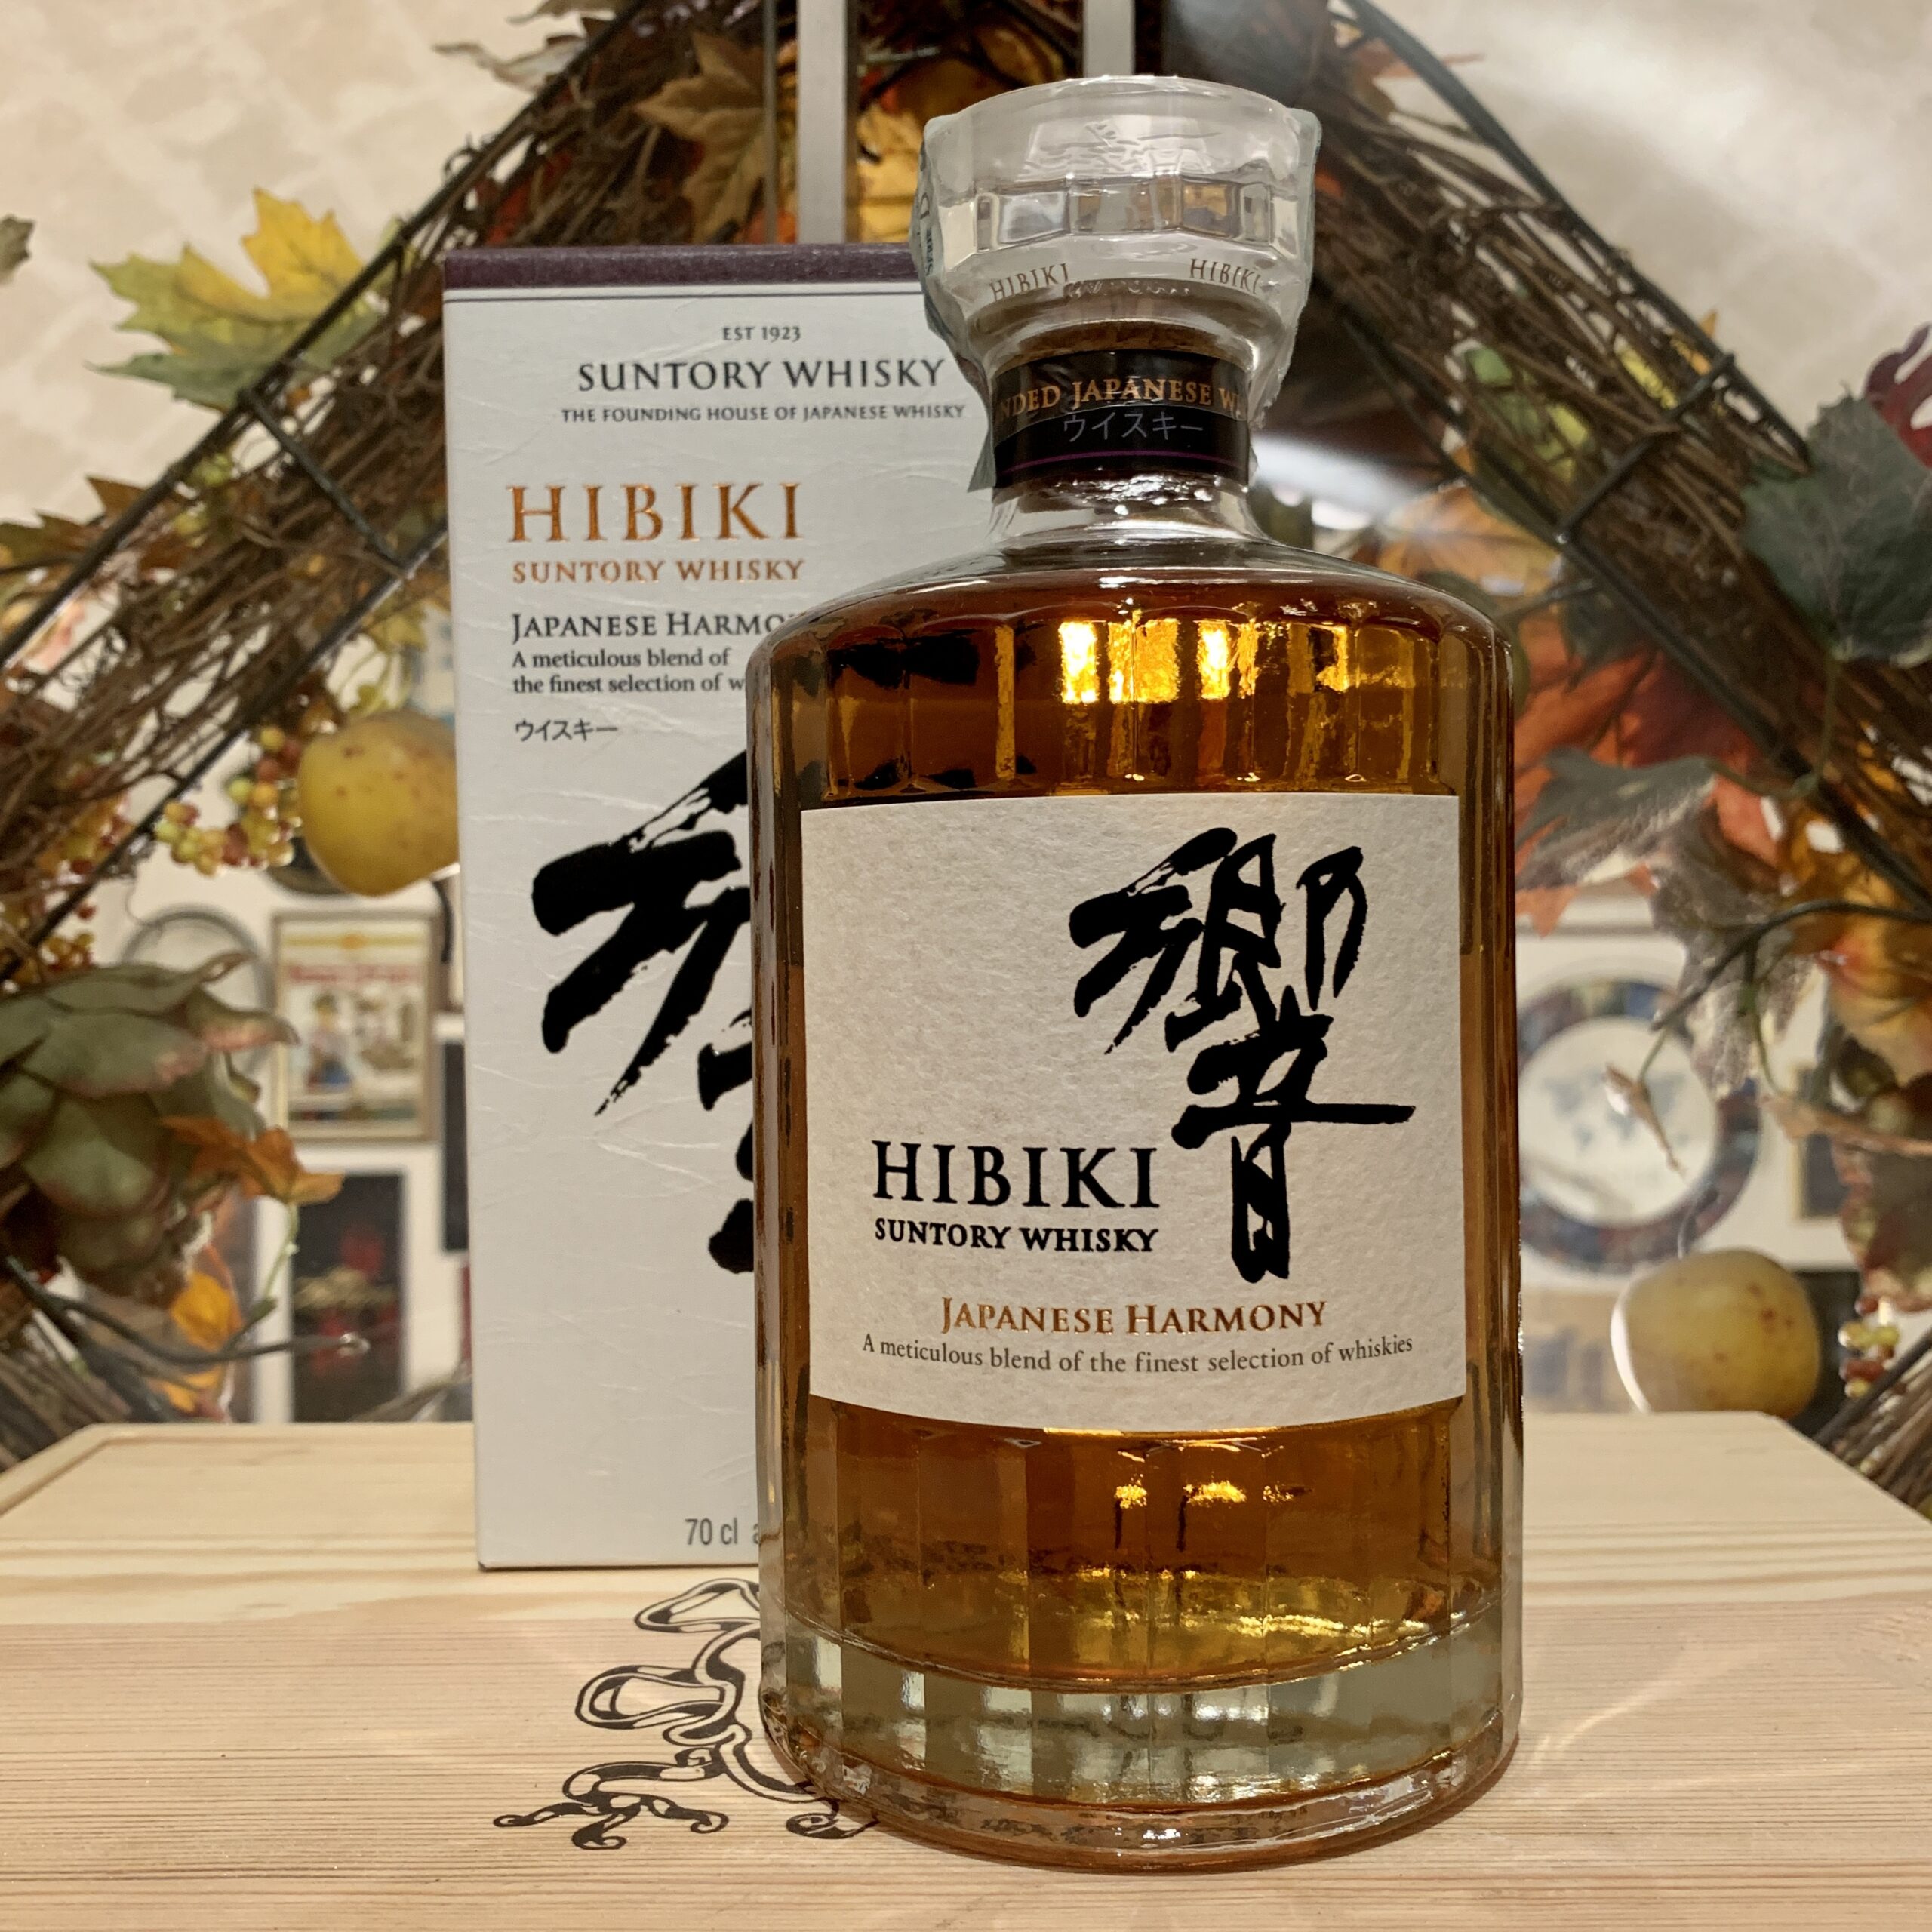 Suntory Hibiki Japanese Harmony Blended Japanese Whisky